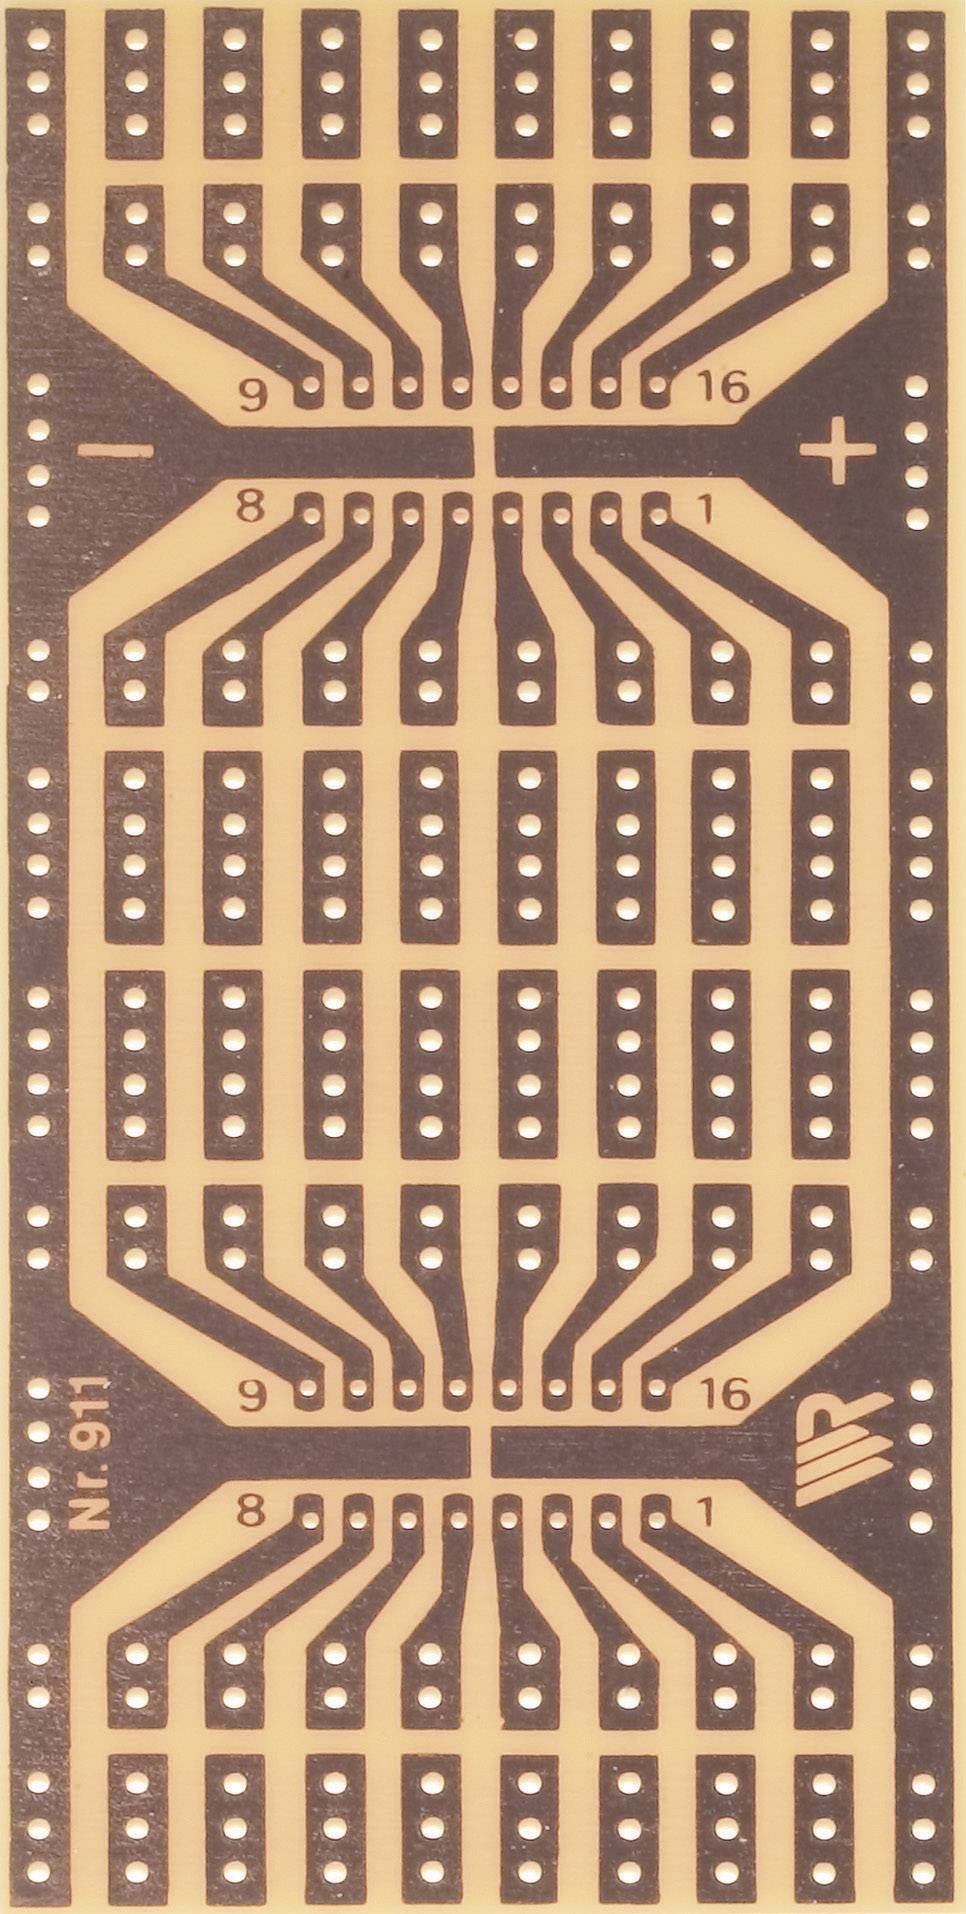 RADEMACHER Experimentierplatine Hartpapier (L x B) 110 mm x 80 mm 35 µm Rastermaß 2.54 mm WR Rademac